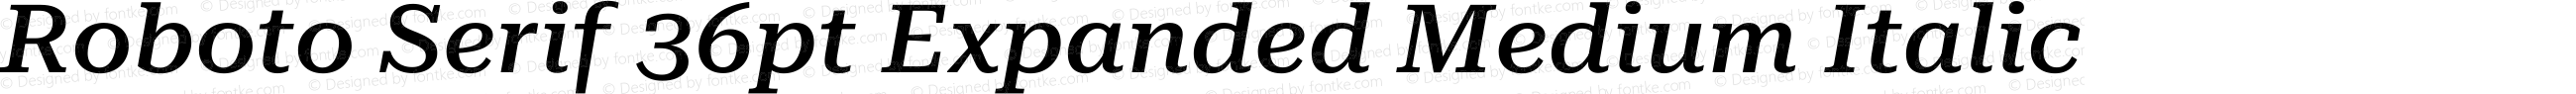 Roboto Serif 36pt Expanded Medium Italic